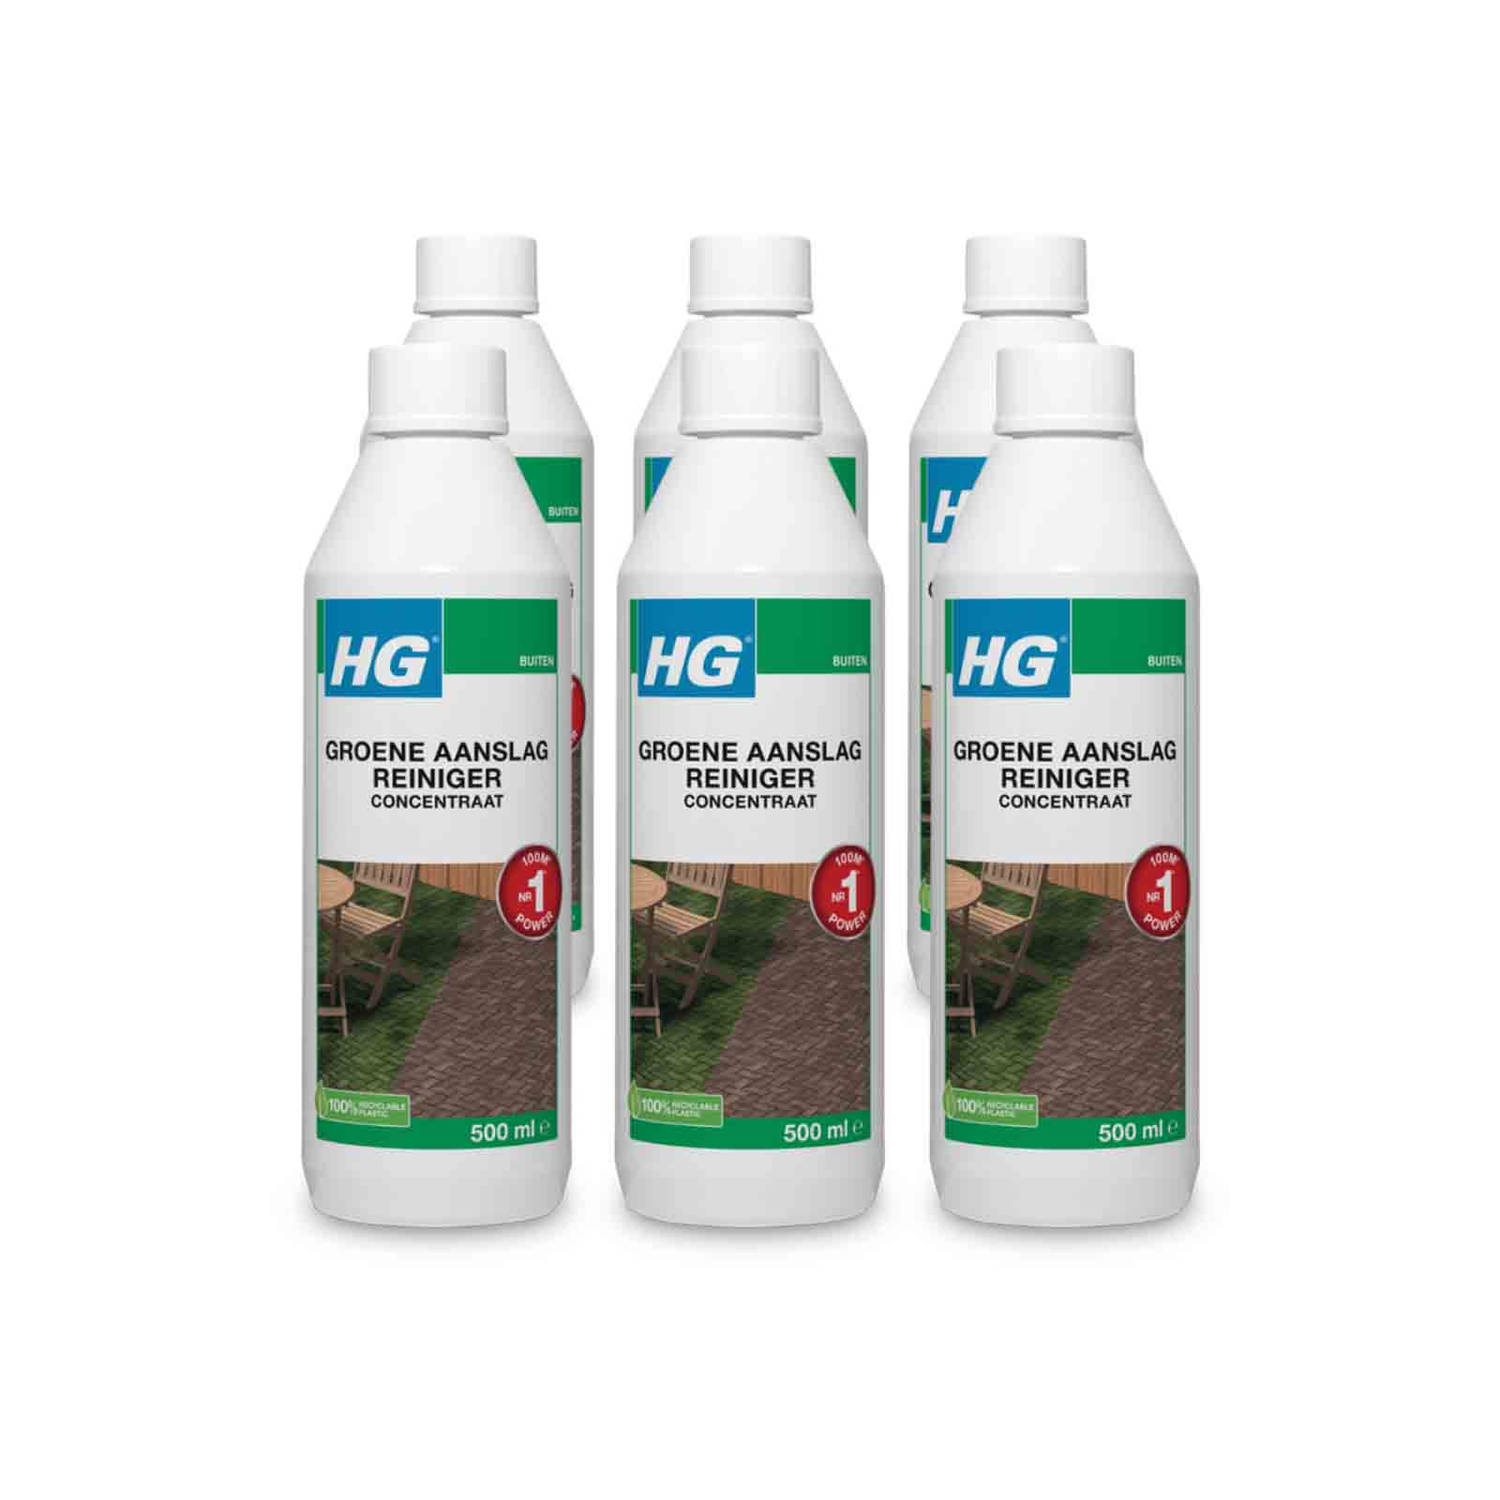 HG groene aanslag reiniger 500 ml - 6 stuks